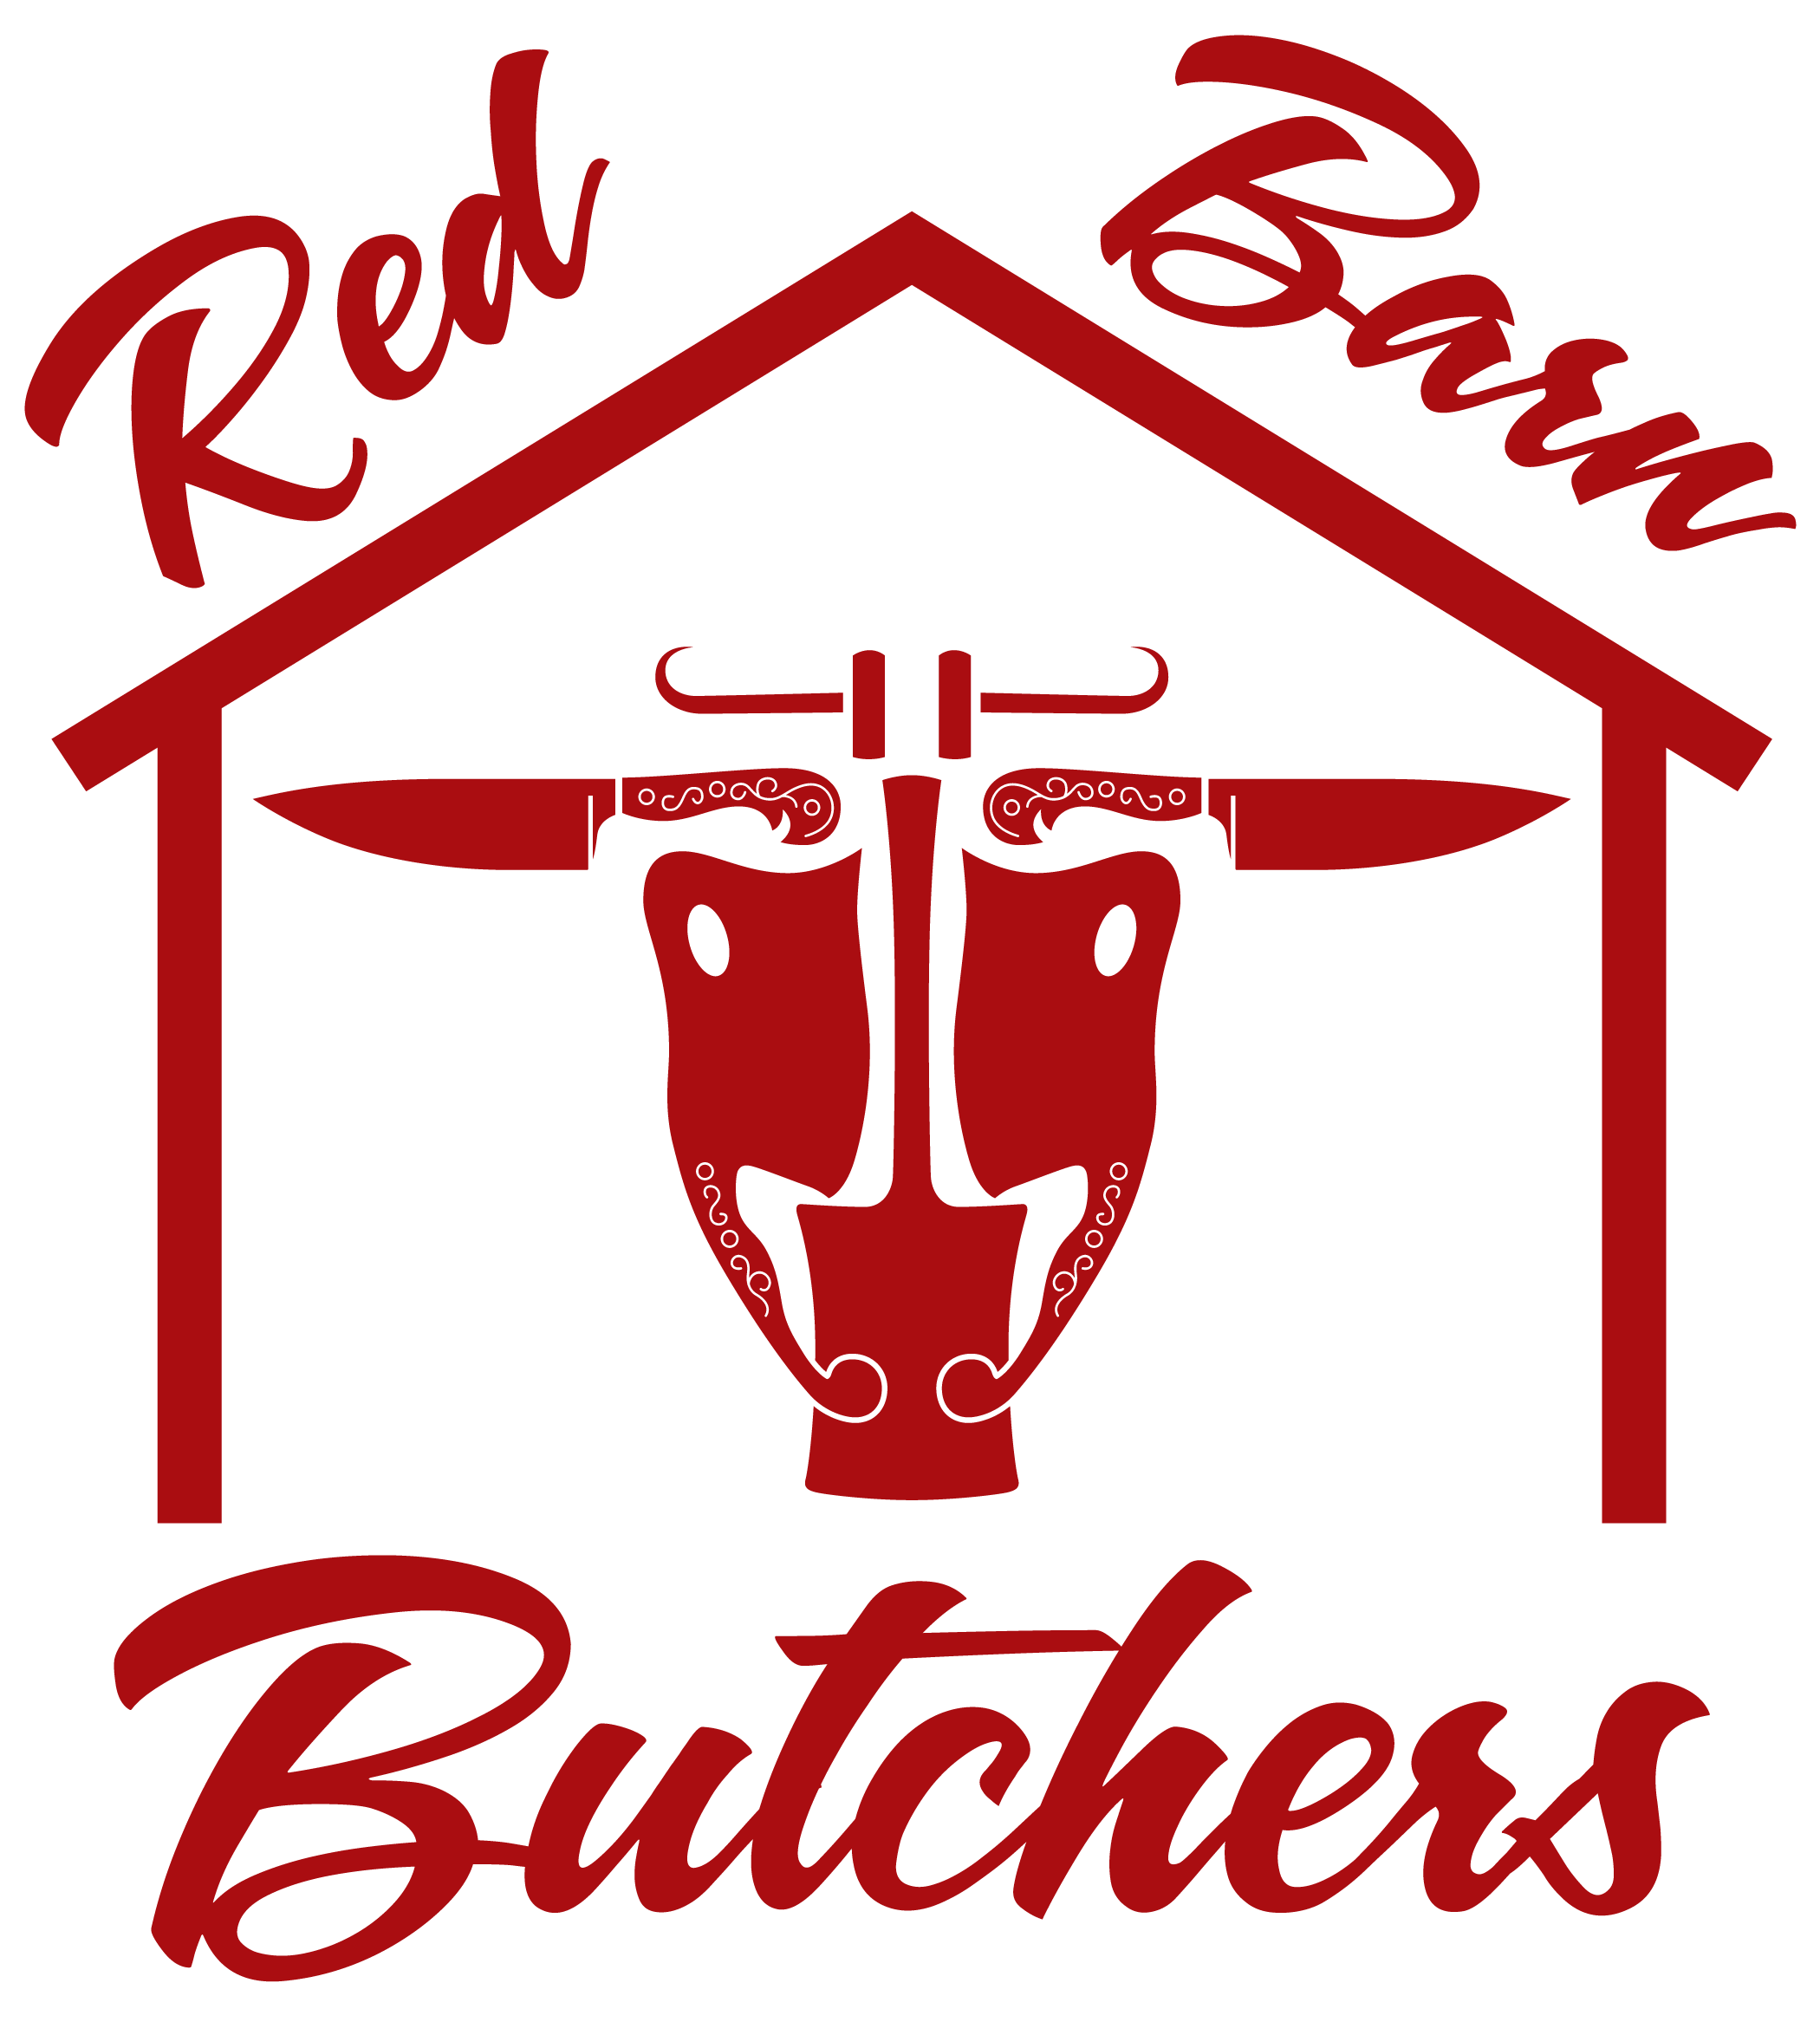 red barn butchers logo image